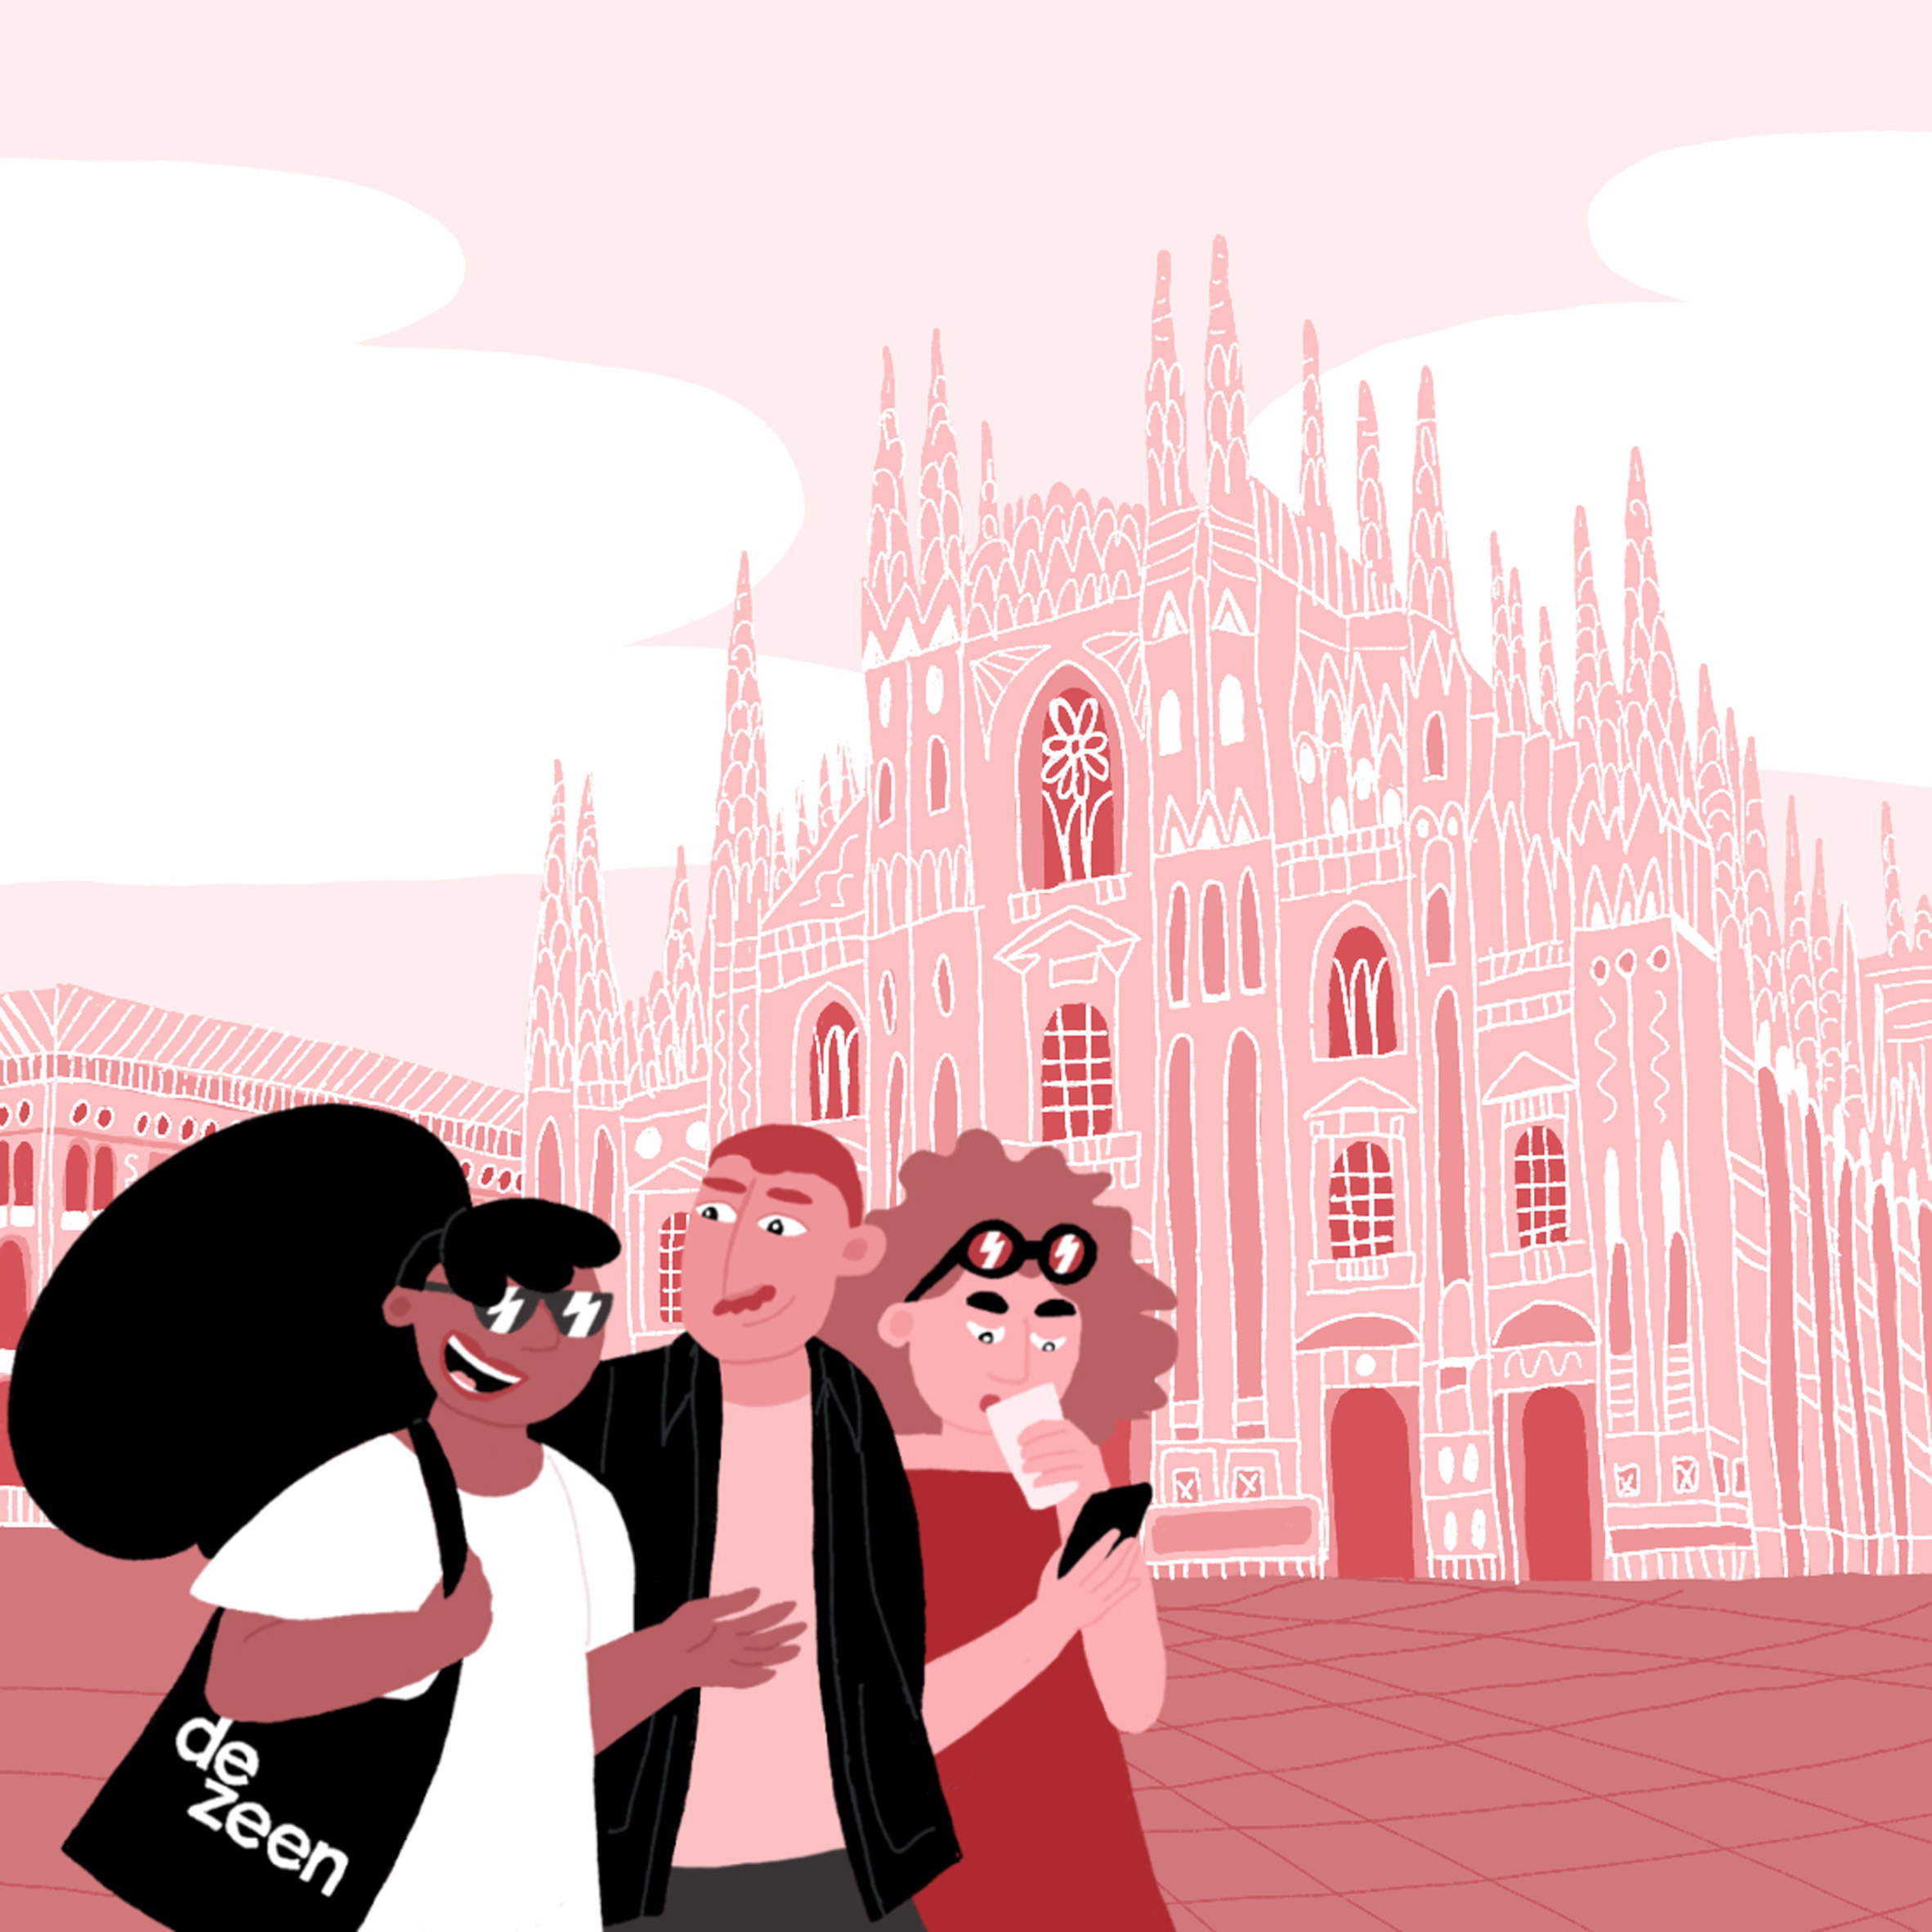 Milano Design Week: Salone del Mobile.Milano 2023 - MILAN Welcome City Guide